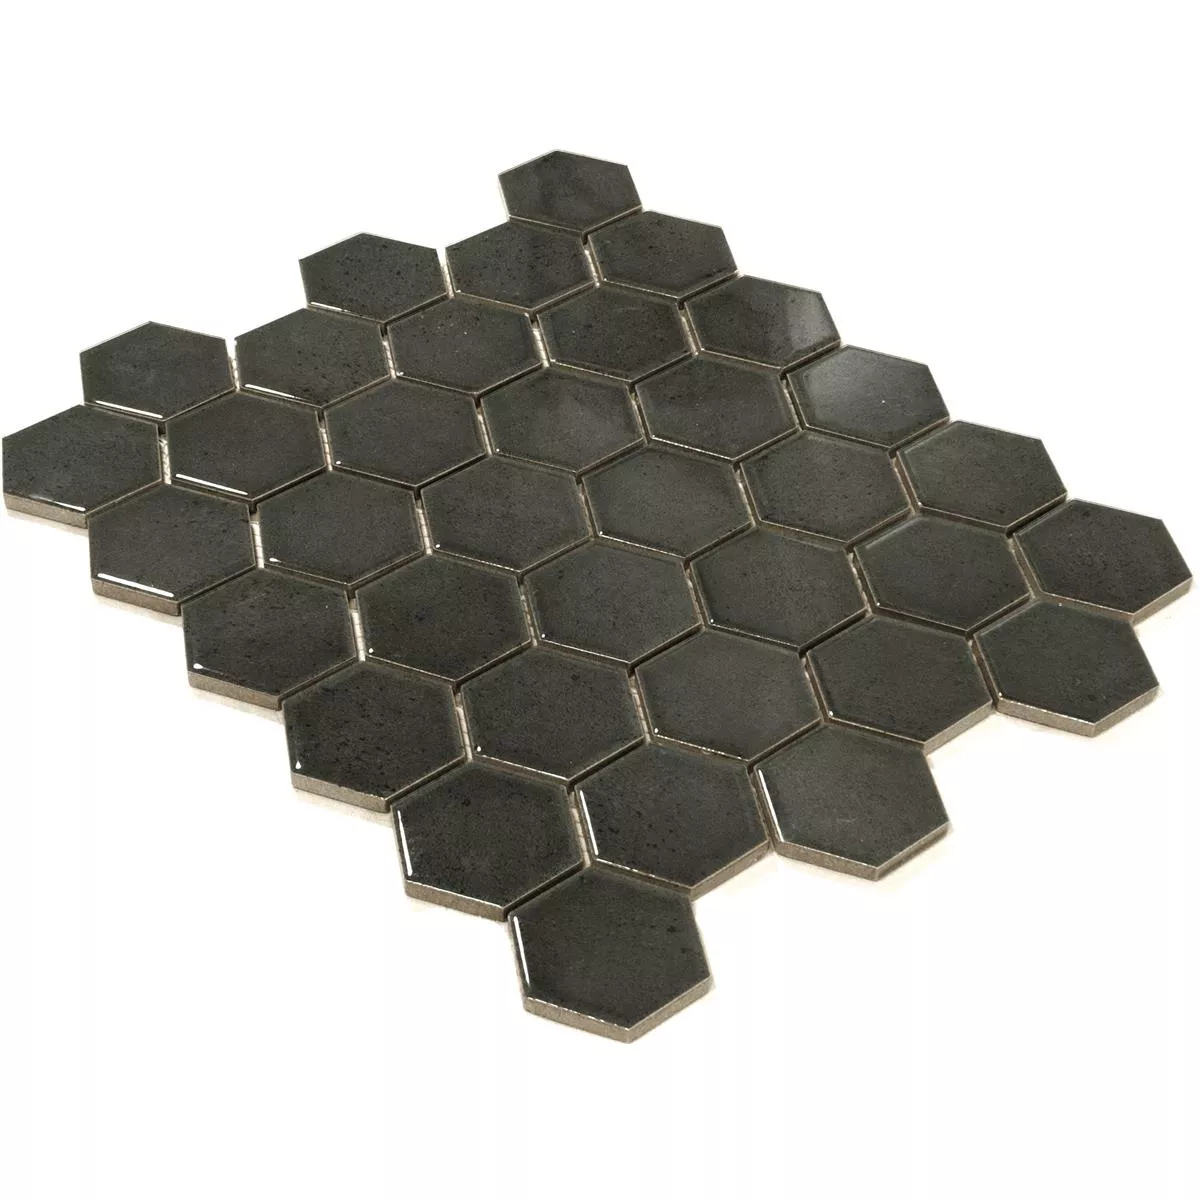 Ceramic Mosaic Tiles Eldertown Hexagon Black